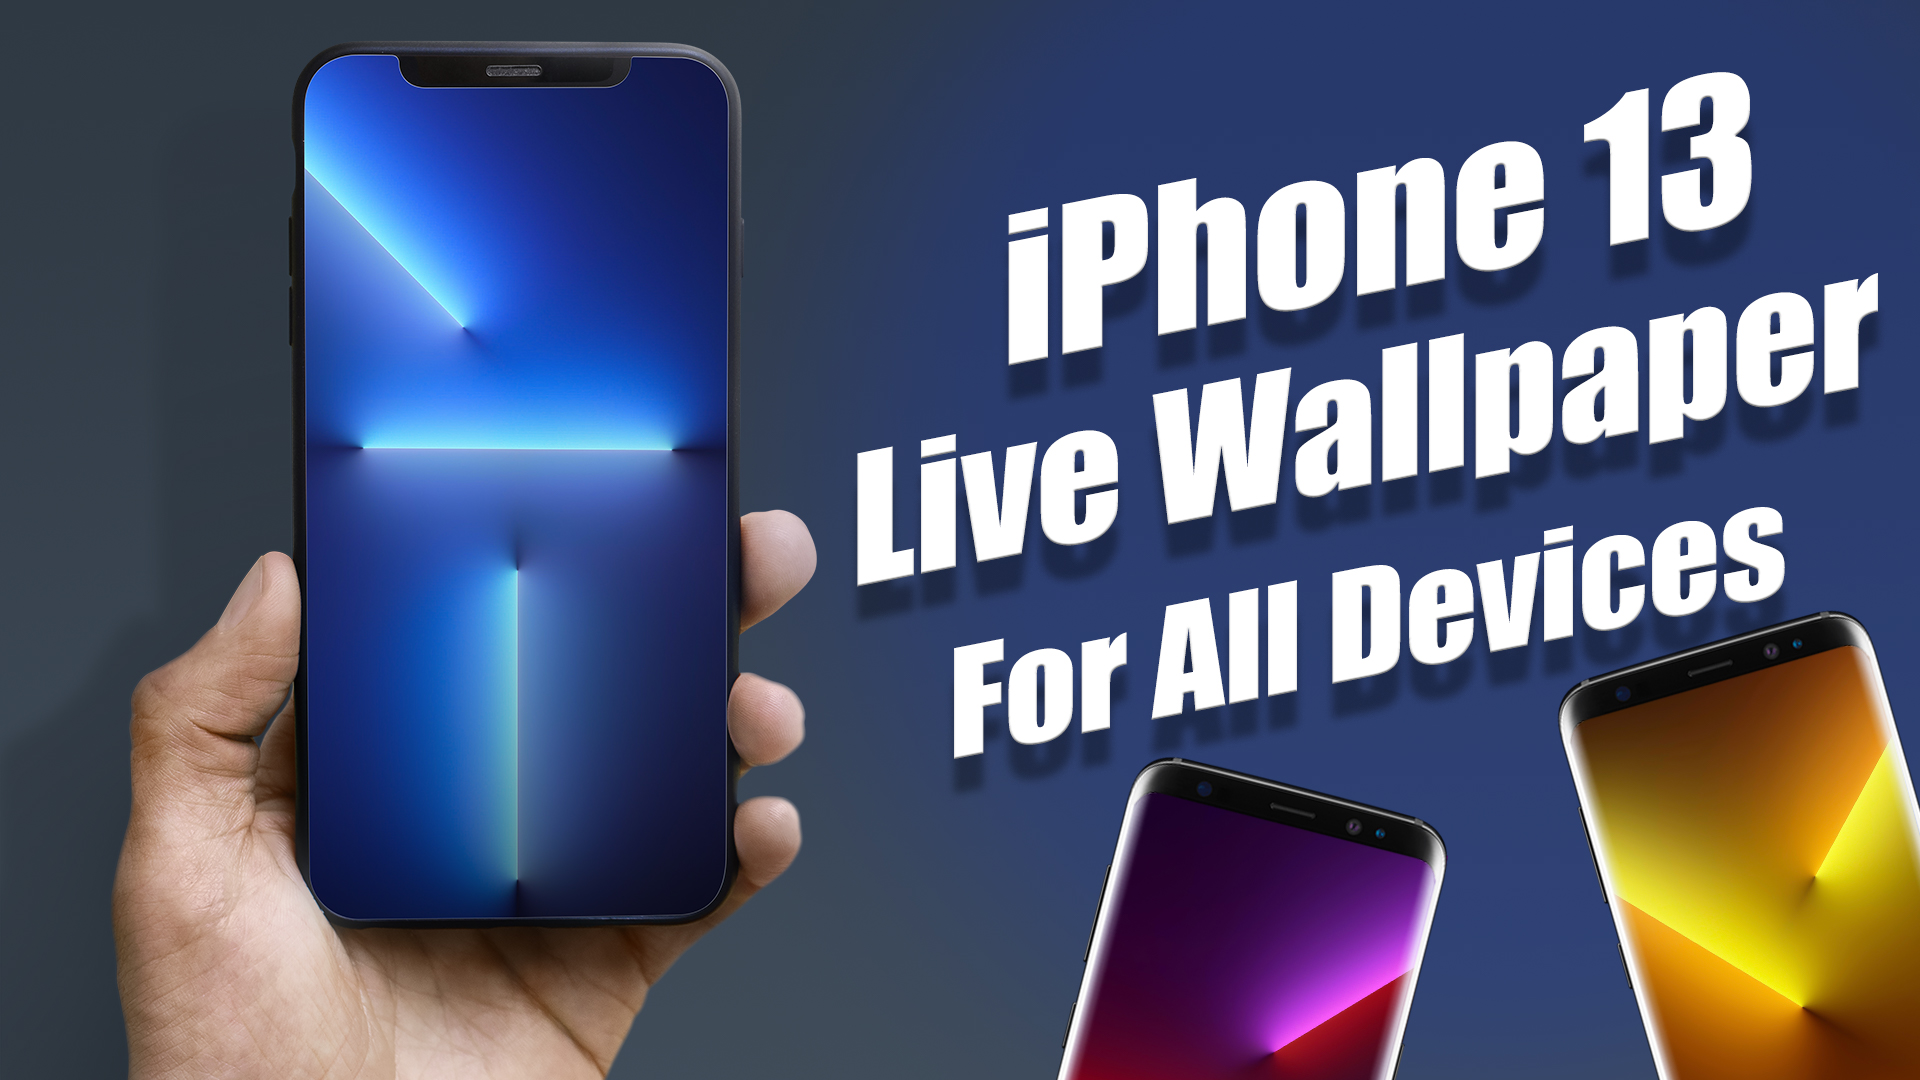 iphone 13 live wallpaper - iTech